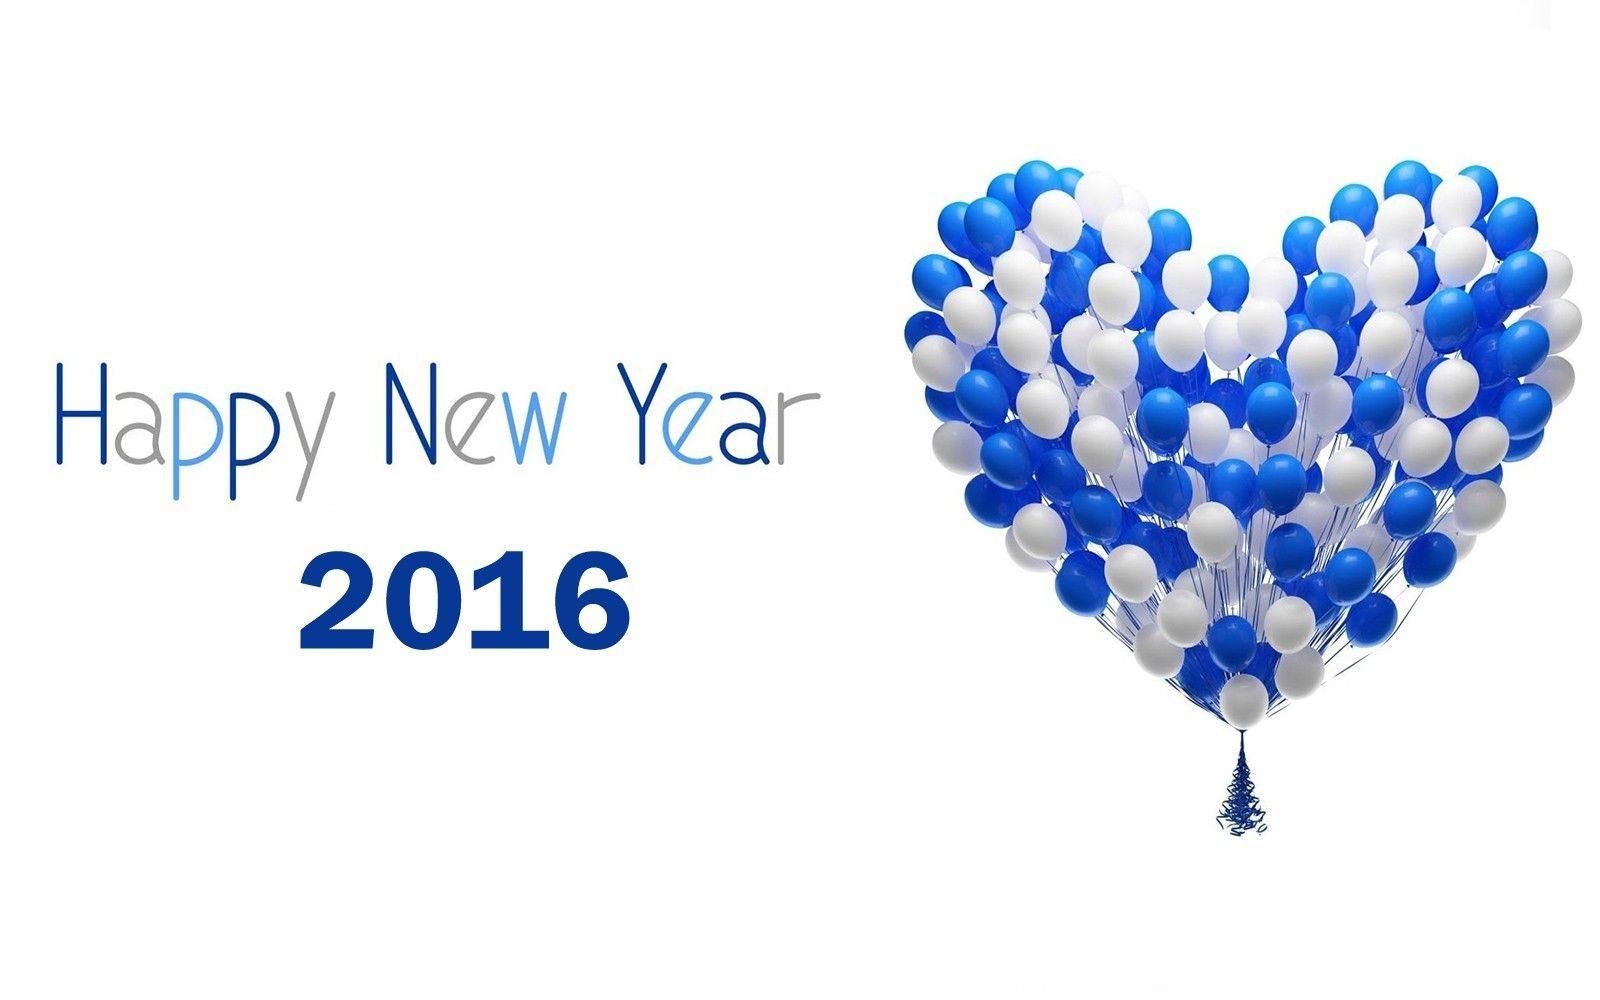 Happy New Year Greeting & HD Image, Wallpaper 2016